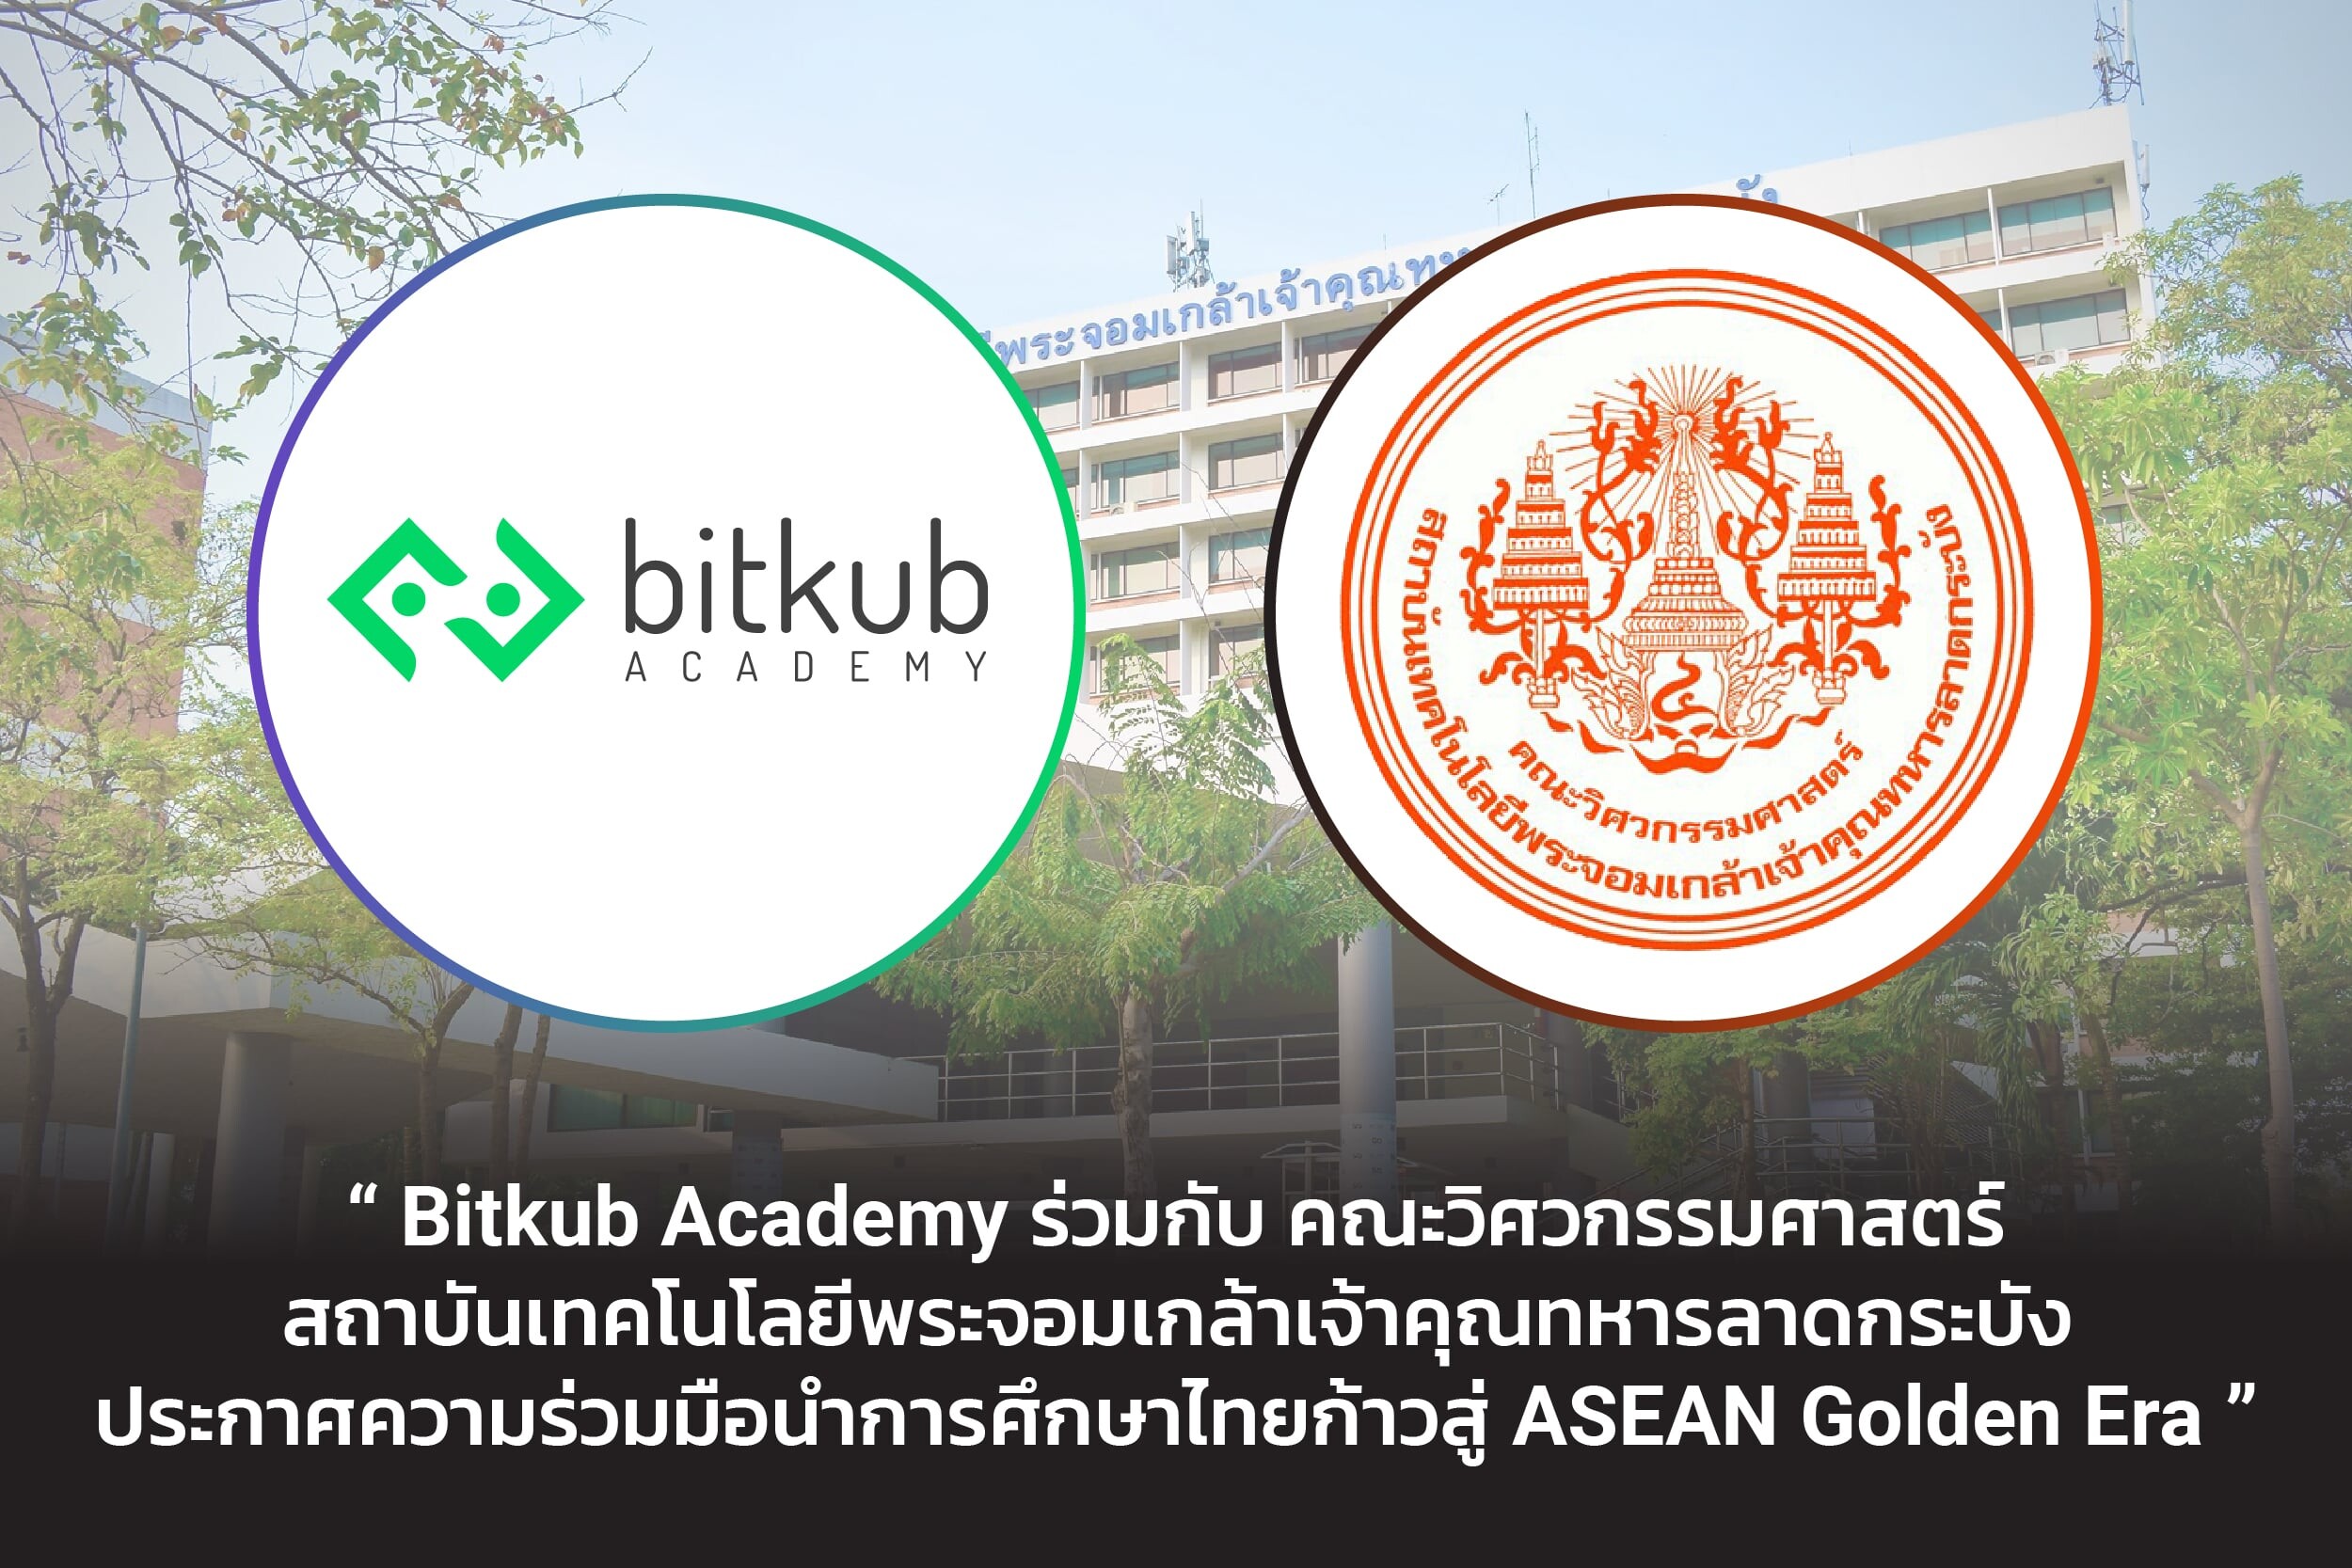 Bitkub Academy ร่วมกับ คณะวิศวกรรมศาสตร์ สถาบันเทคโนโลยีพระจอมเกล้าเจ้าคุณทหารลาดกระบัง ประกาศความร่วมมือนำการศึกษาไทยก้าวสู่ ASEAN Golden Era